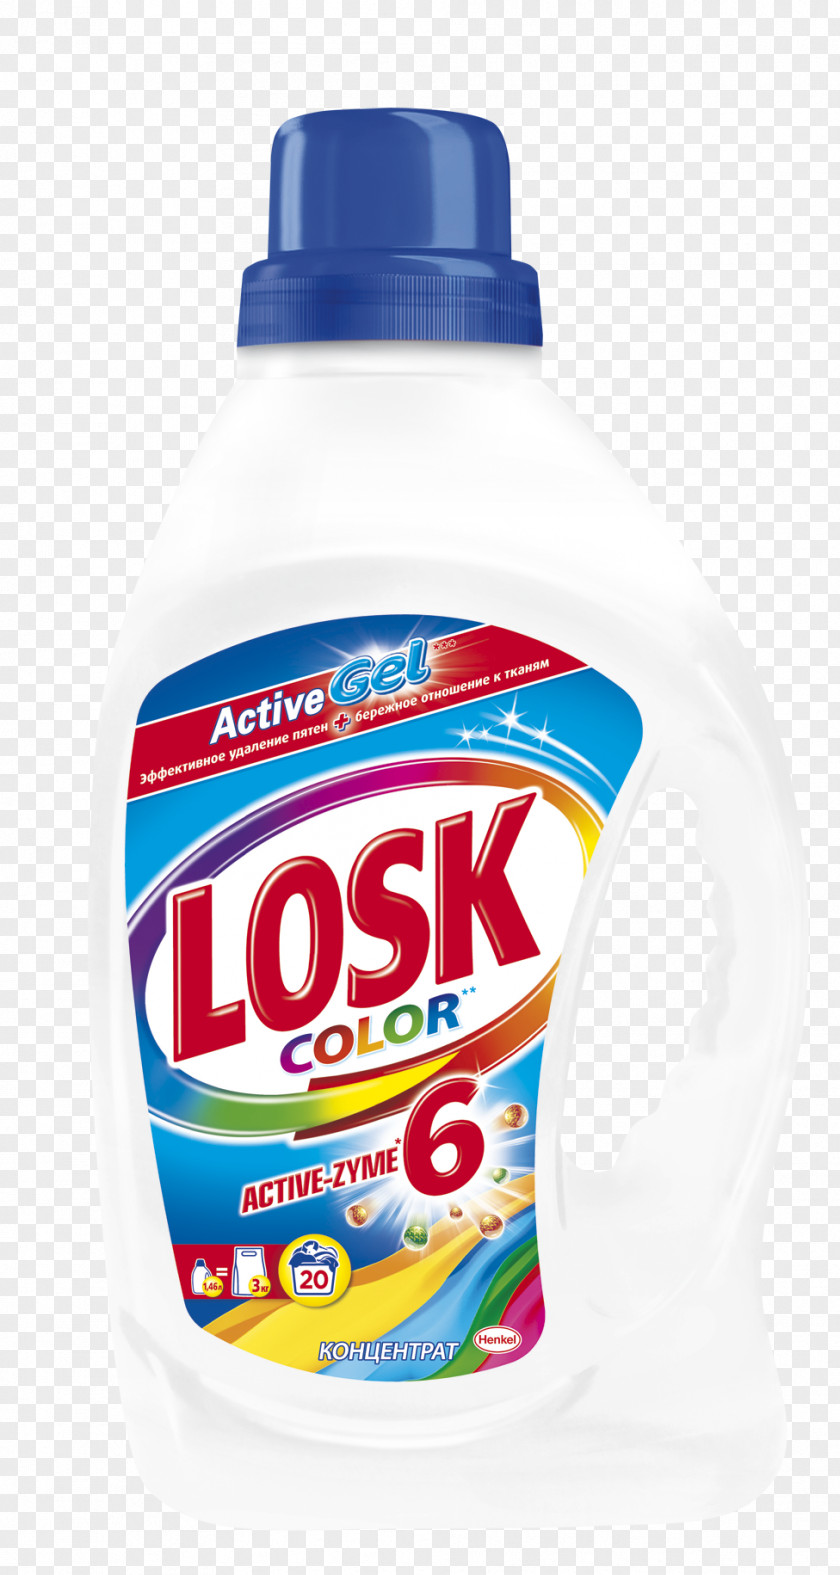 Water Laundry Detergent Liquid Bottles Стиральный порошок автомат Горное озеро Losk PNG